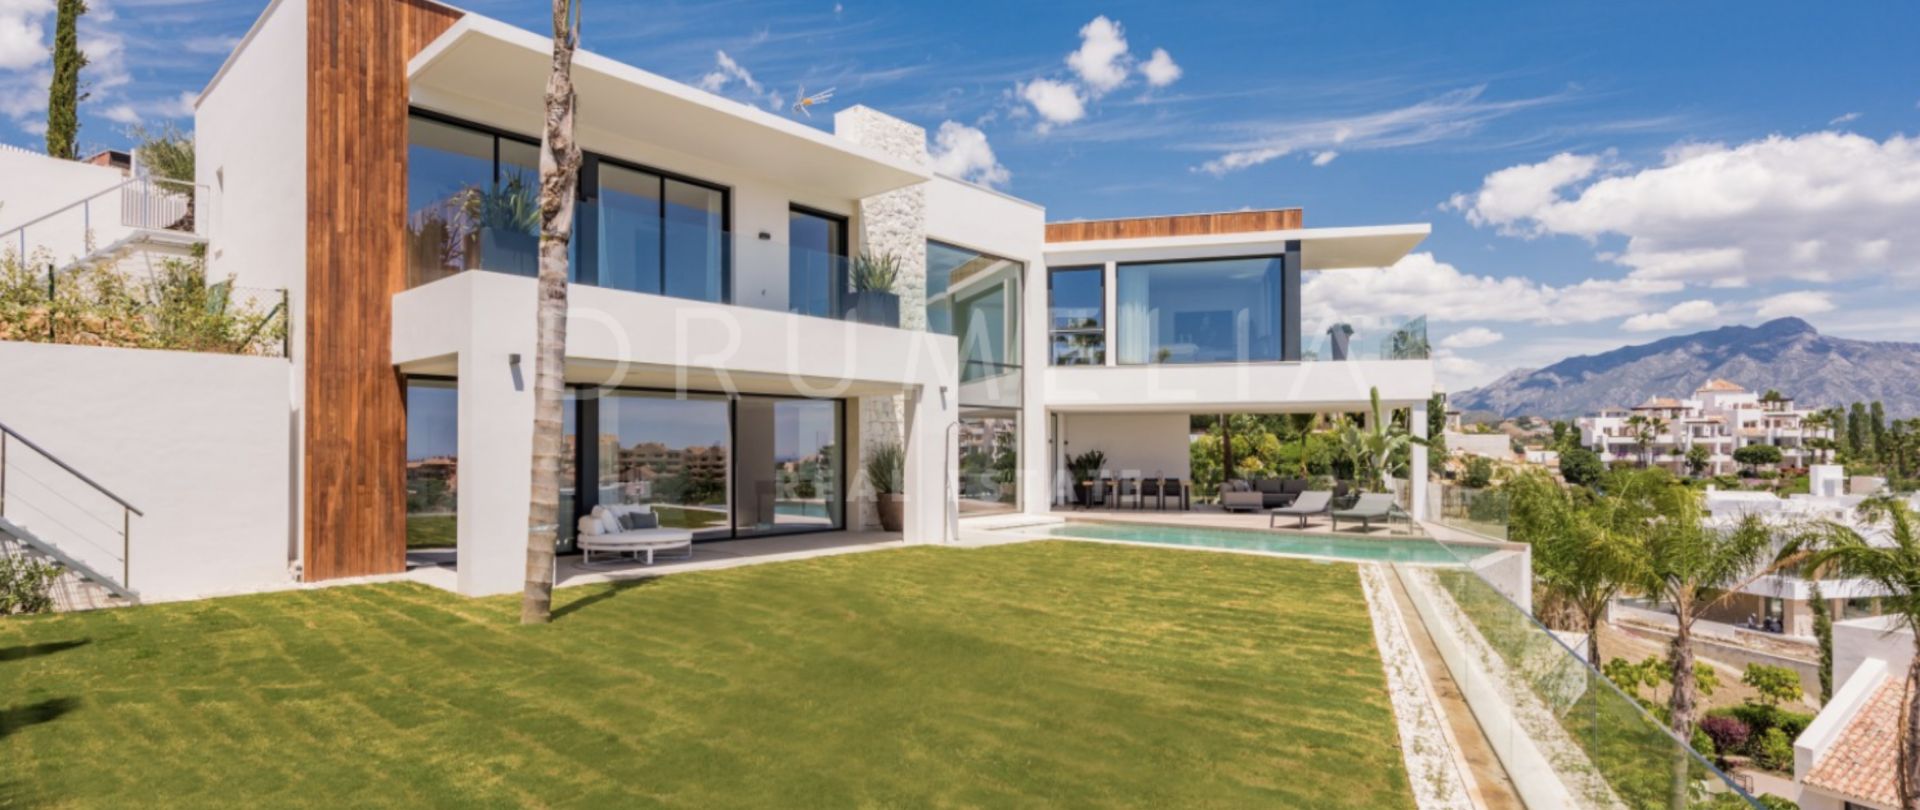 Spektakuläre moderne Villa mit Panoramablick in Alqueria, Benahavis